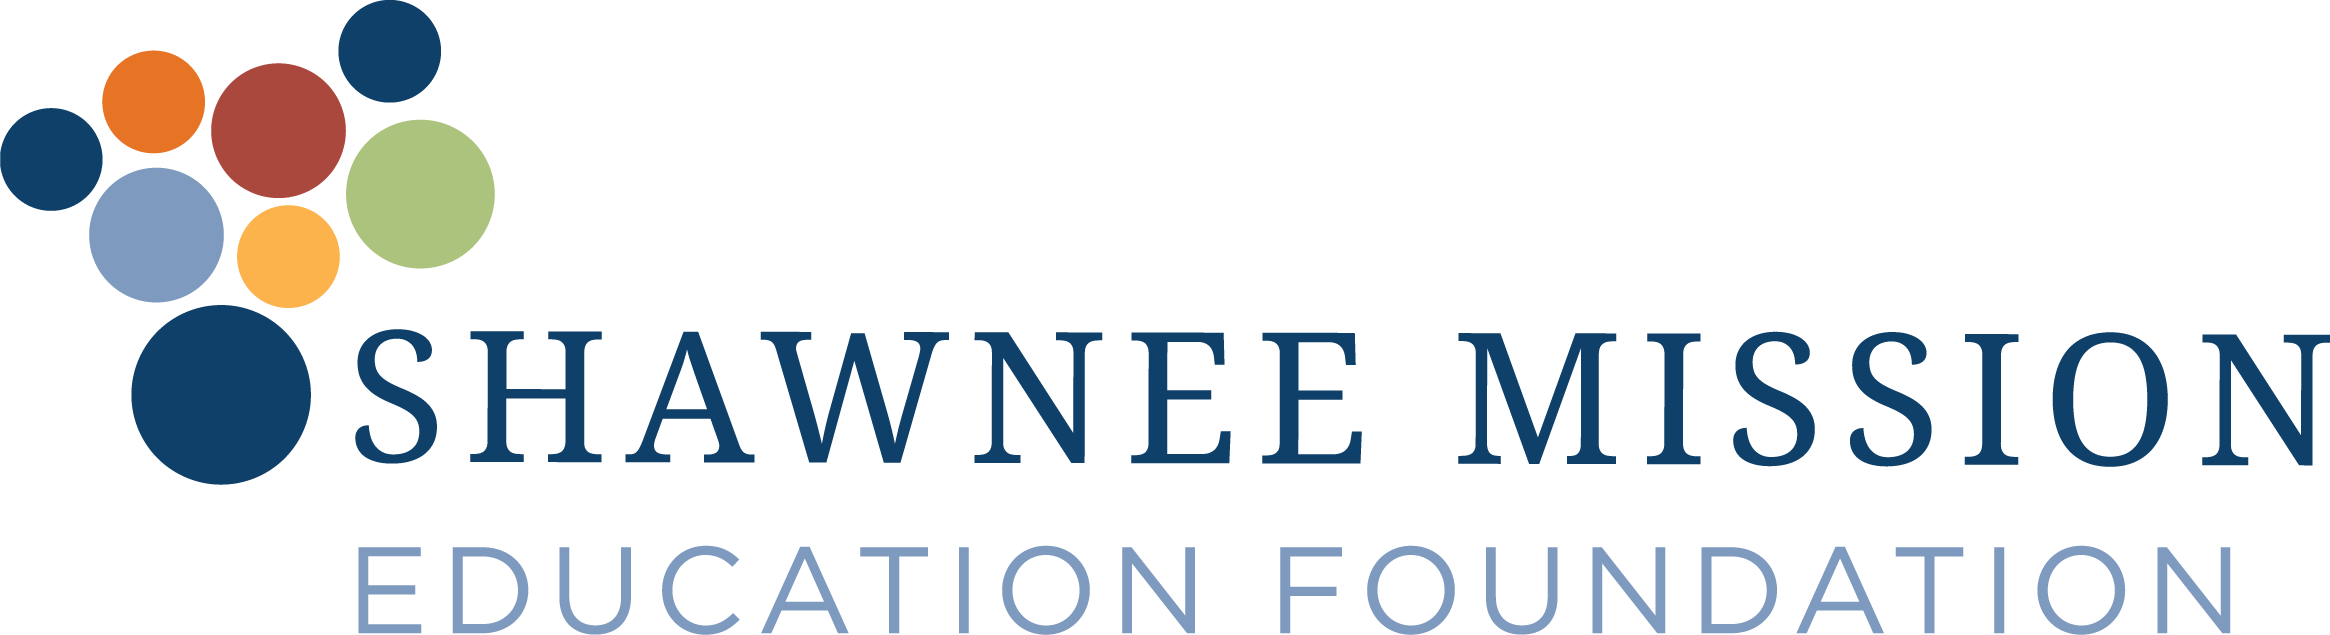 Shawnee Mission Education Foundation Home